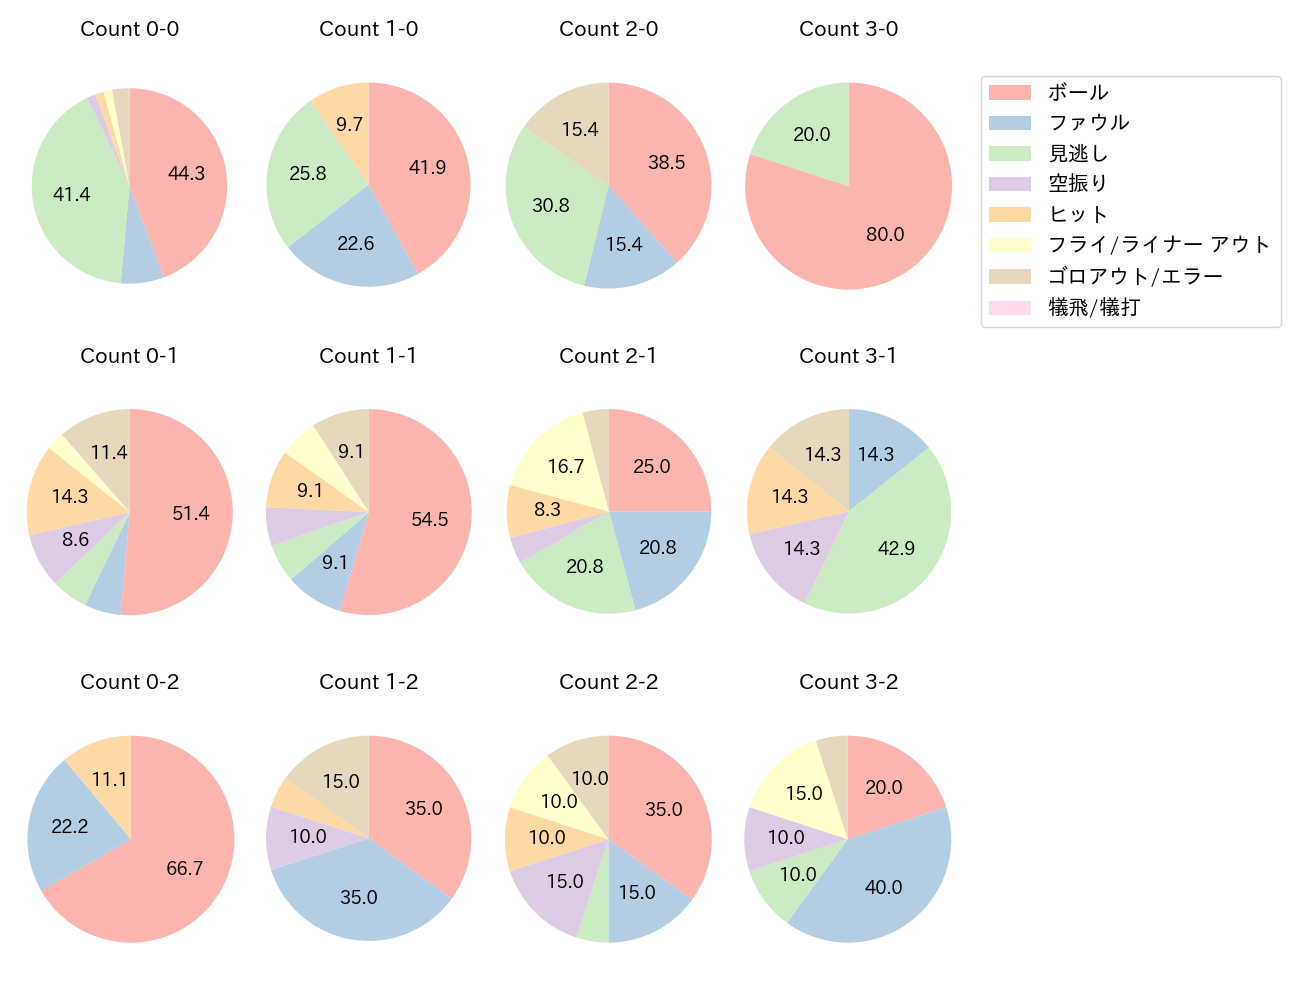 安田 尚憲の球数分布(2021年6月)